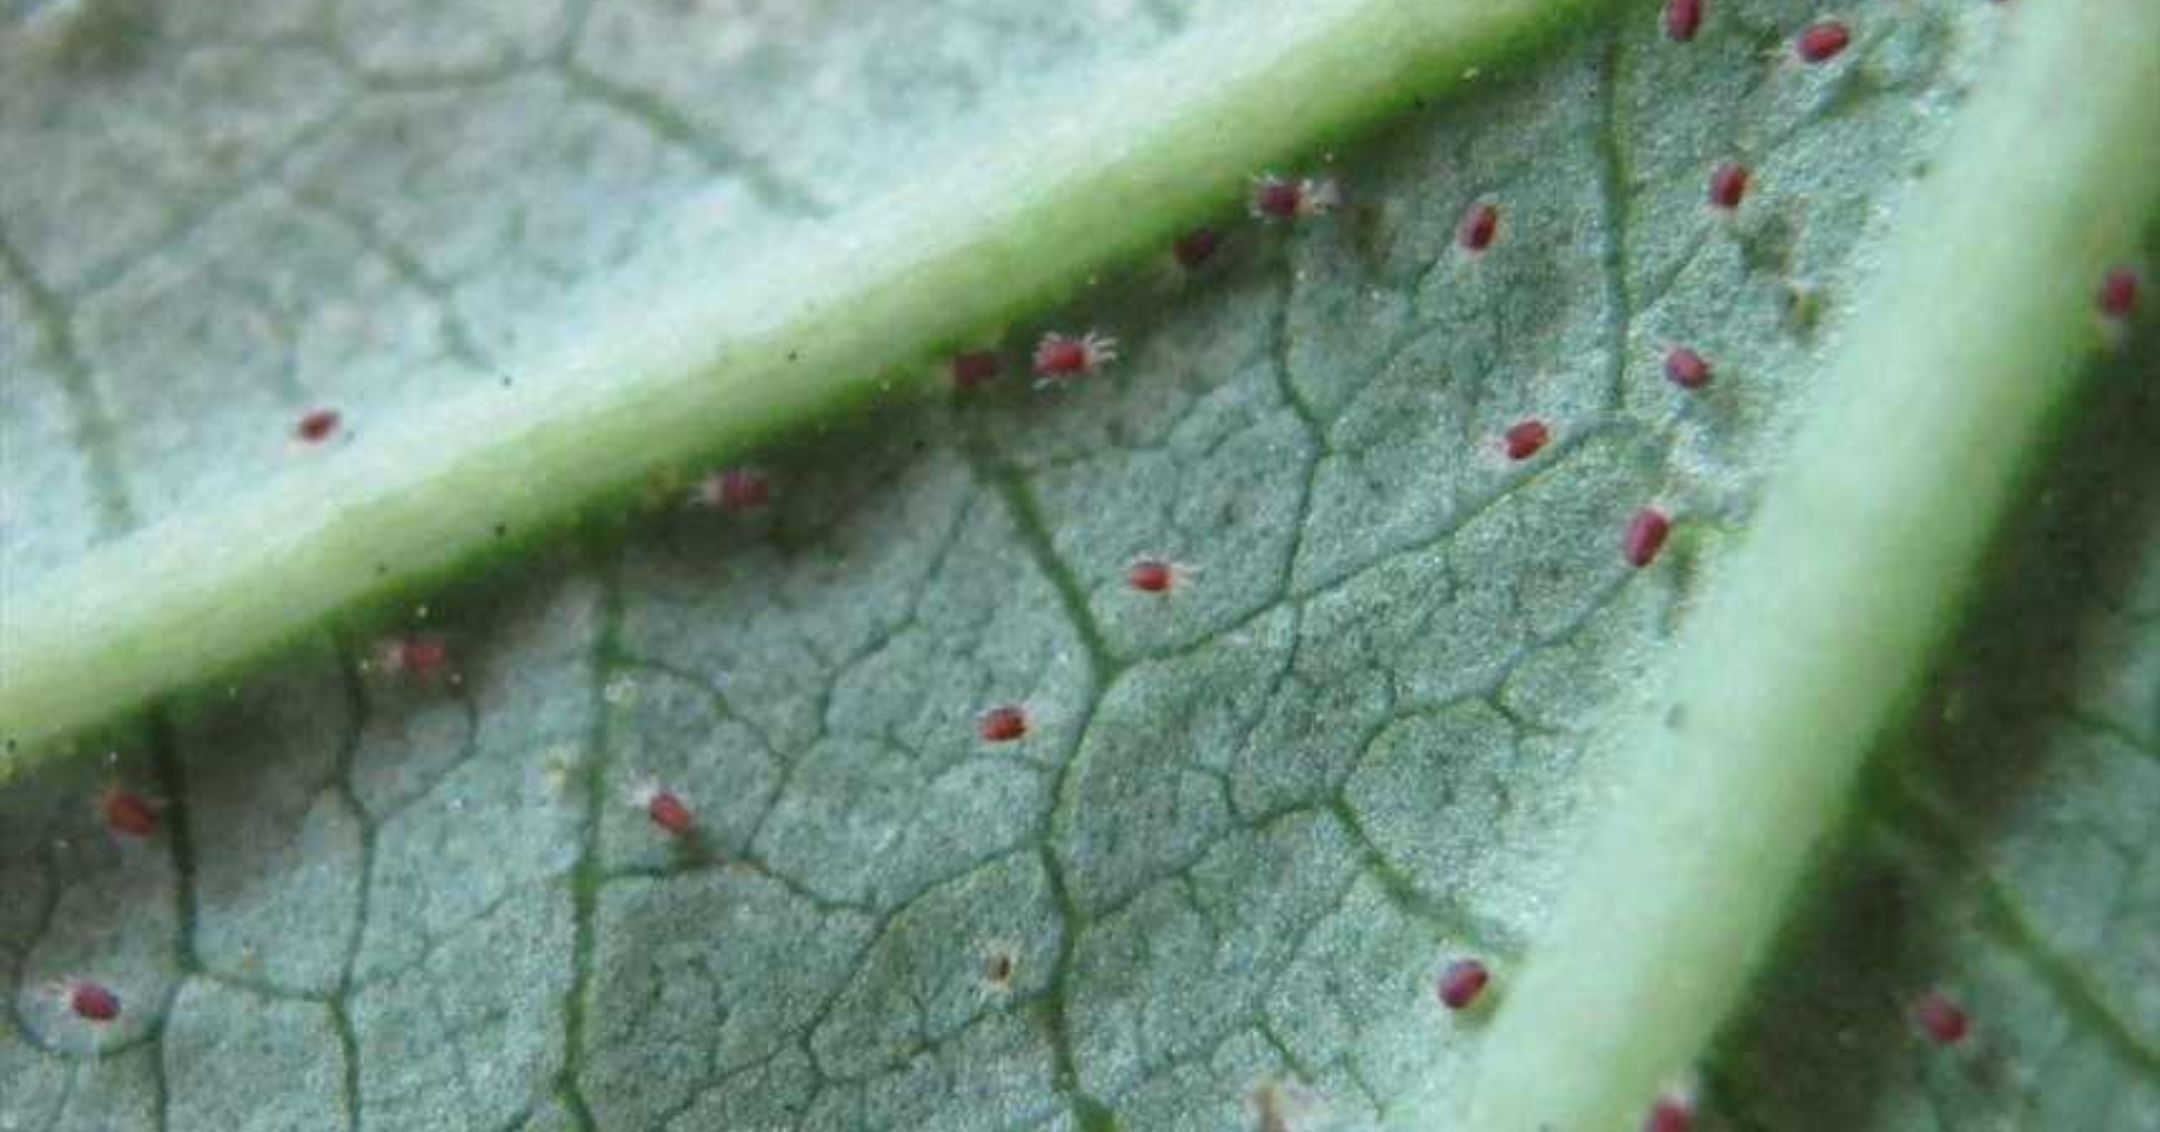 Spider Mites on Cucurbit Leaf (pestnet.org)